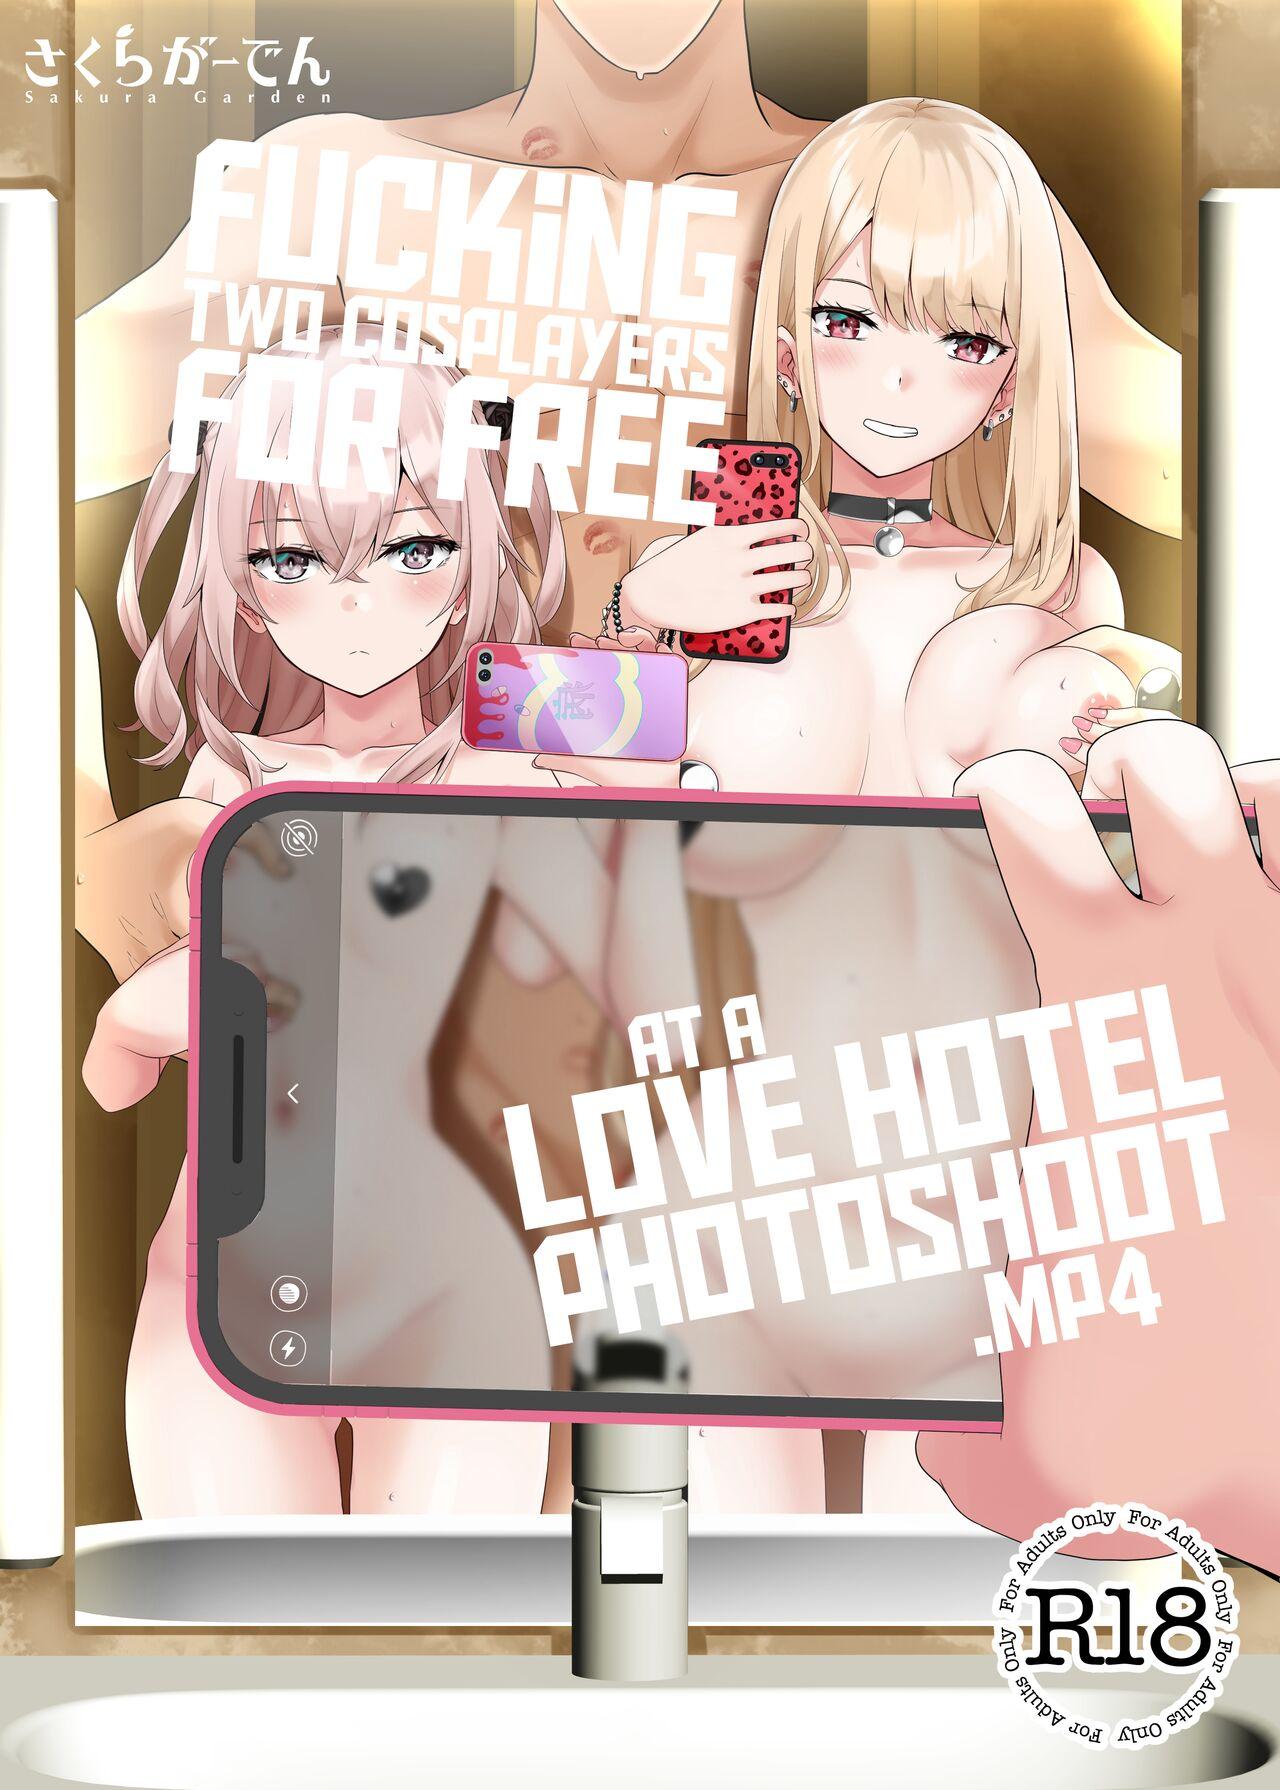 Hokomi 0 Yen Kosu Pako Satsueikai.mp4 | Fucking Two Cosplayers For Free at a Love Hotel Photoshoot.mp4 0